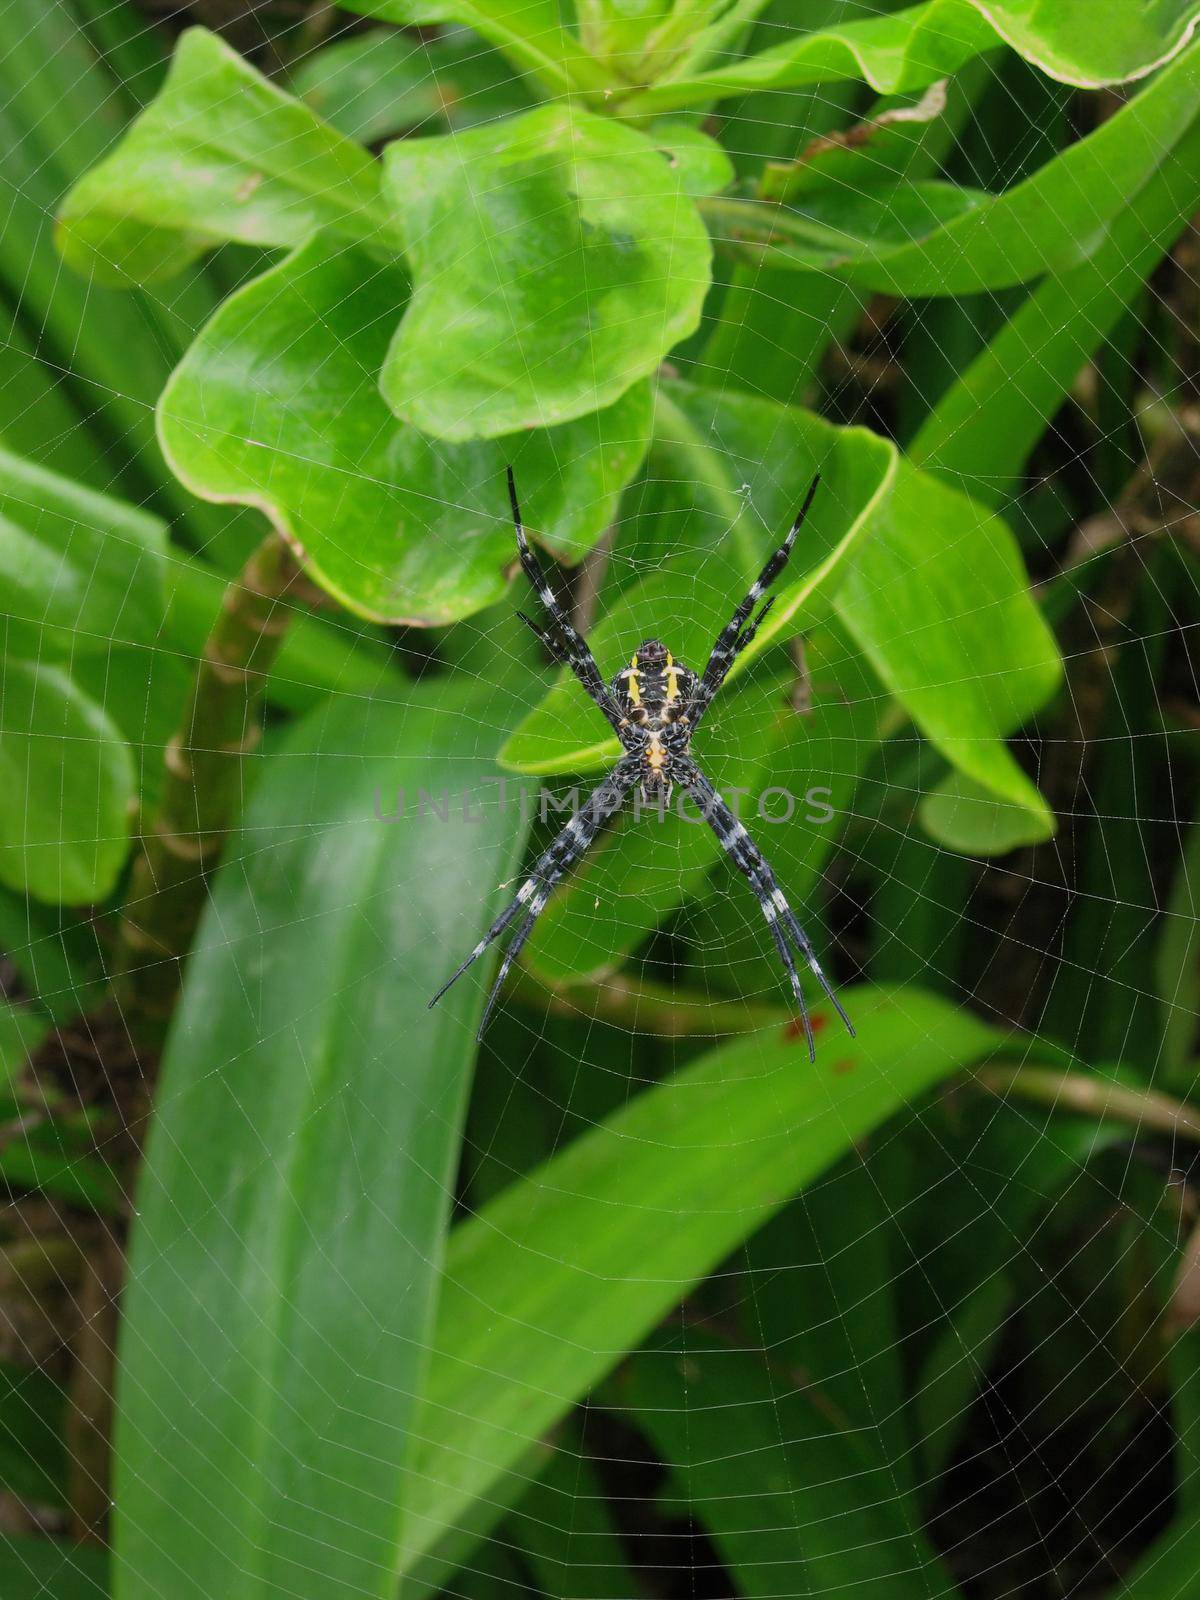 Hawaiian Garden Spider Argiope appensa on a web in Maui, Hawaii, in Hana. High quality photo